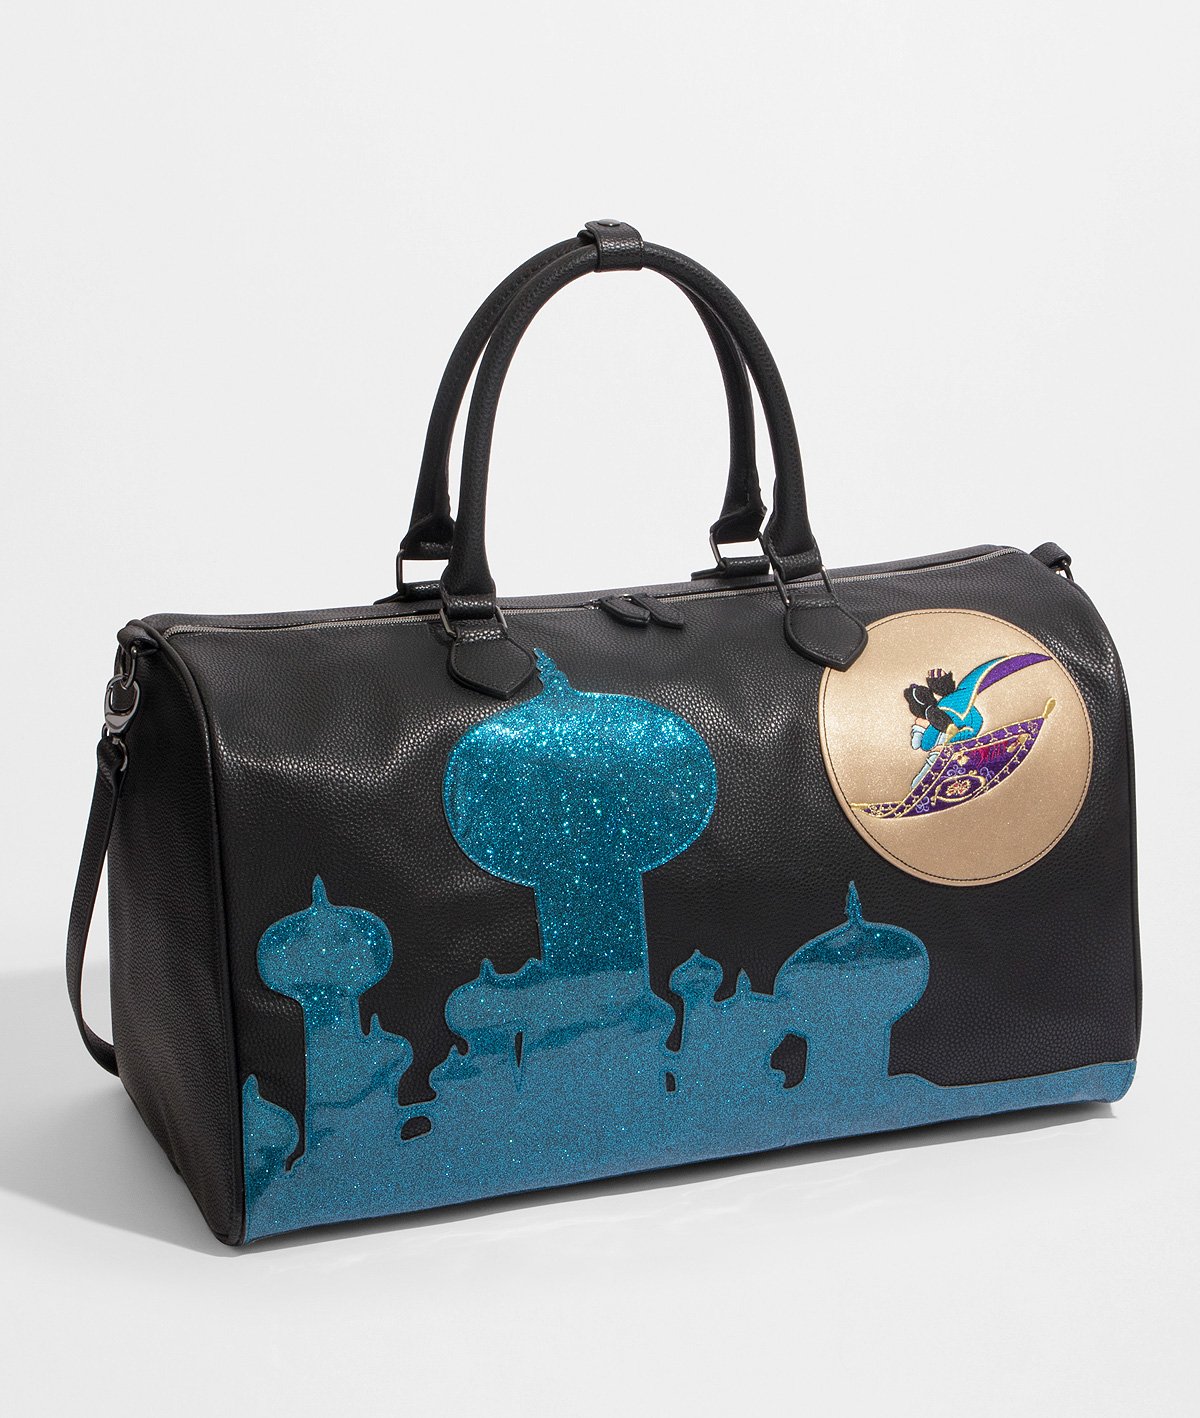 Aladdin Travel Bag